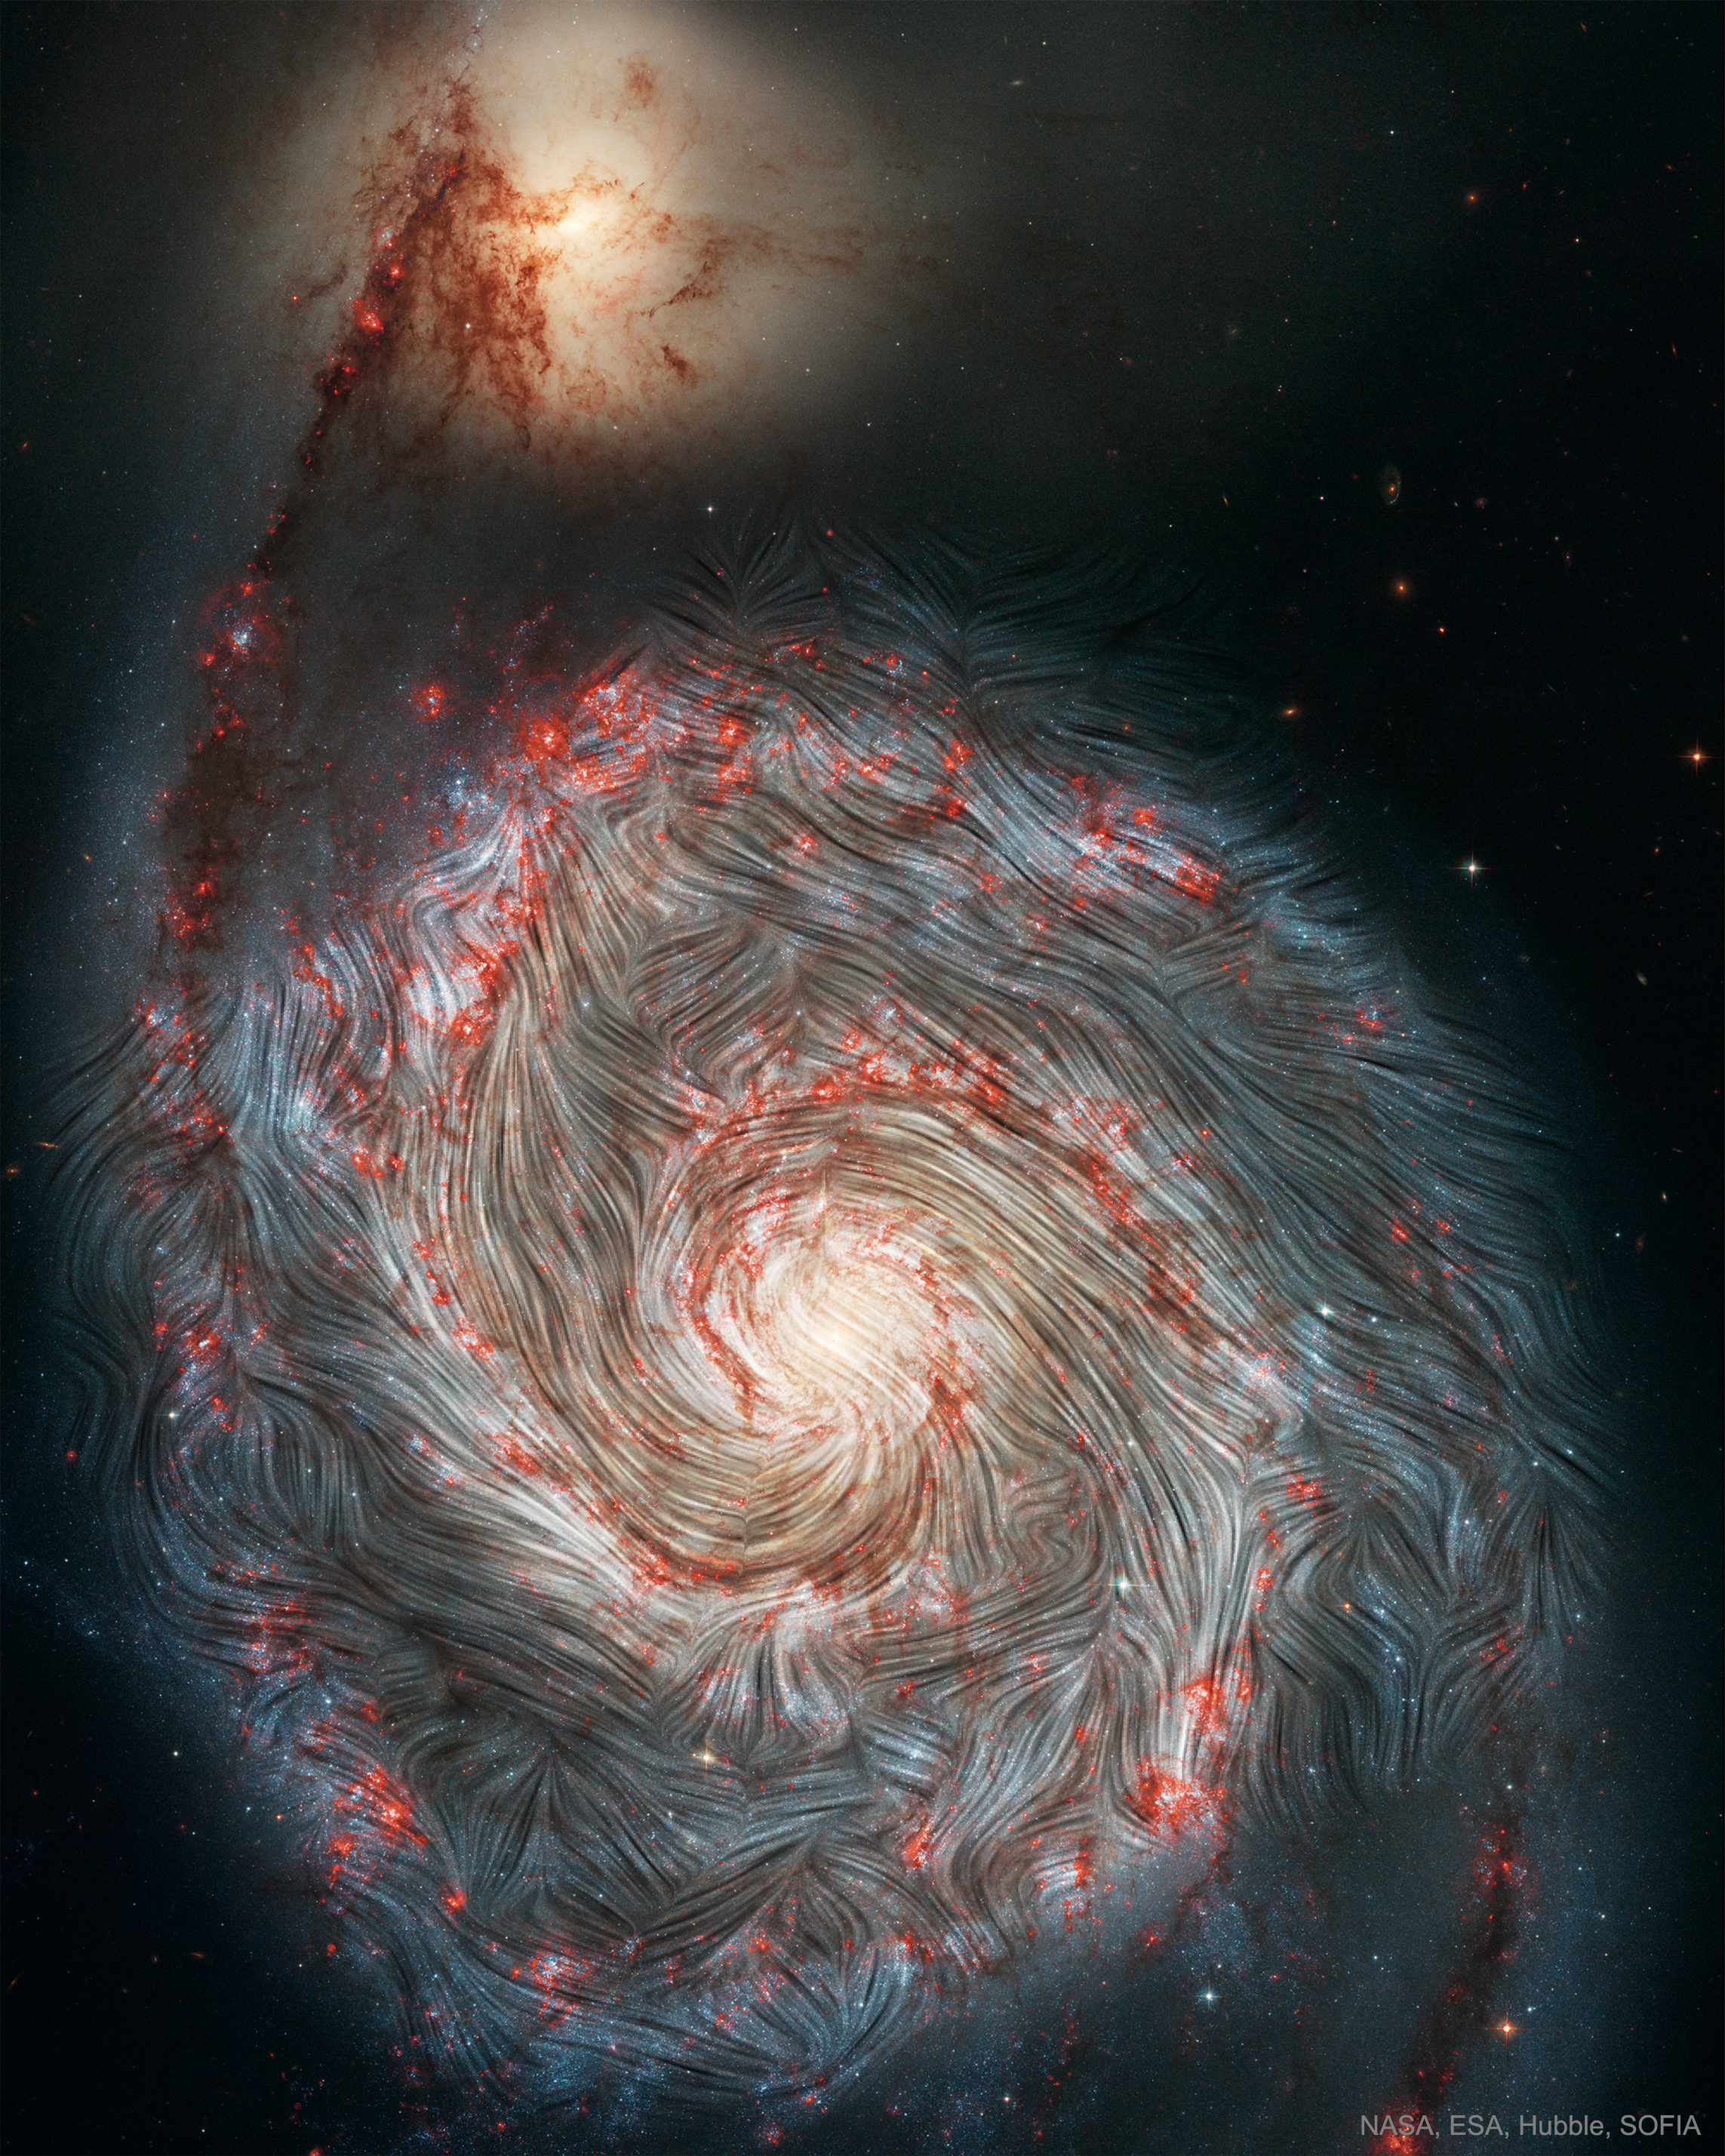 Magnitnoe pole galaktiki Vodovorot